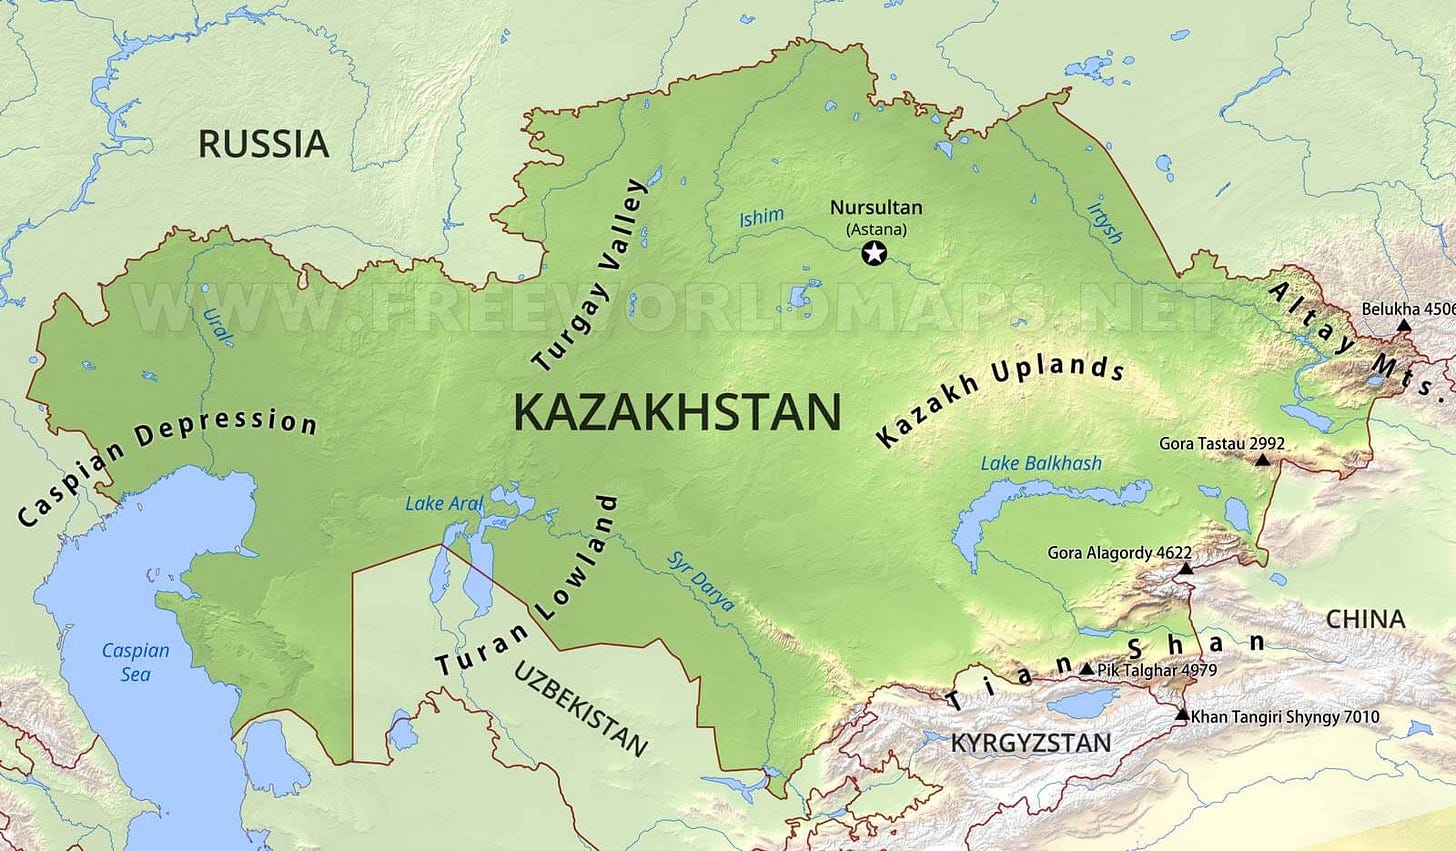 https://freeworldmaps.net/asia/kazakhstan/kazakhstan-map-physical.jpg